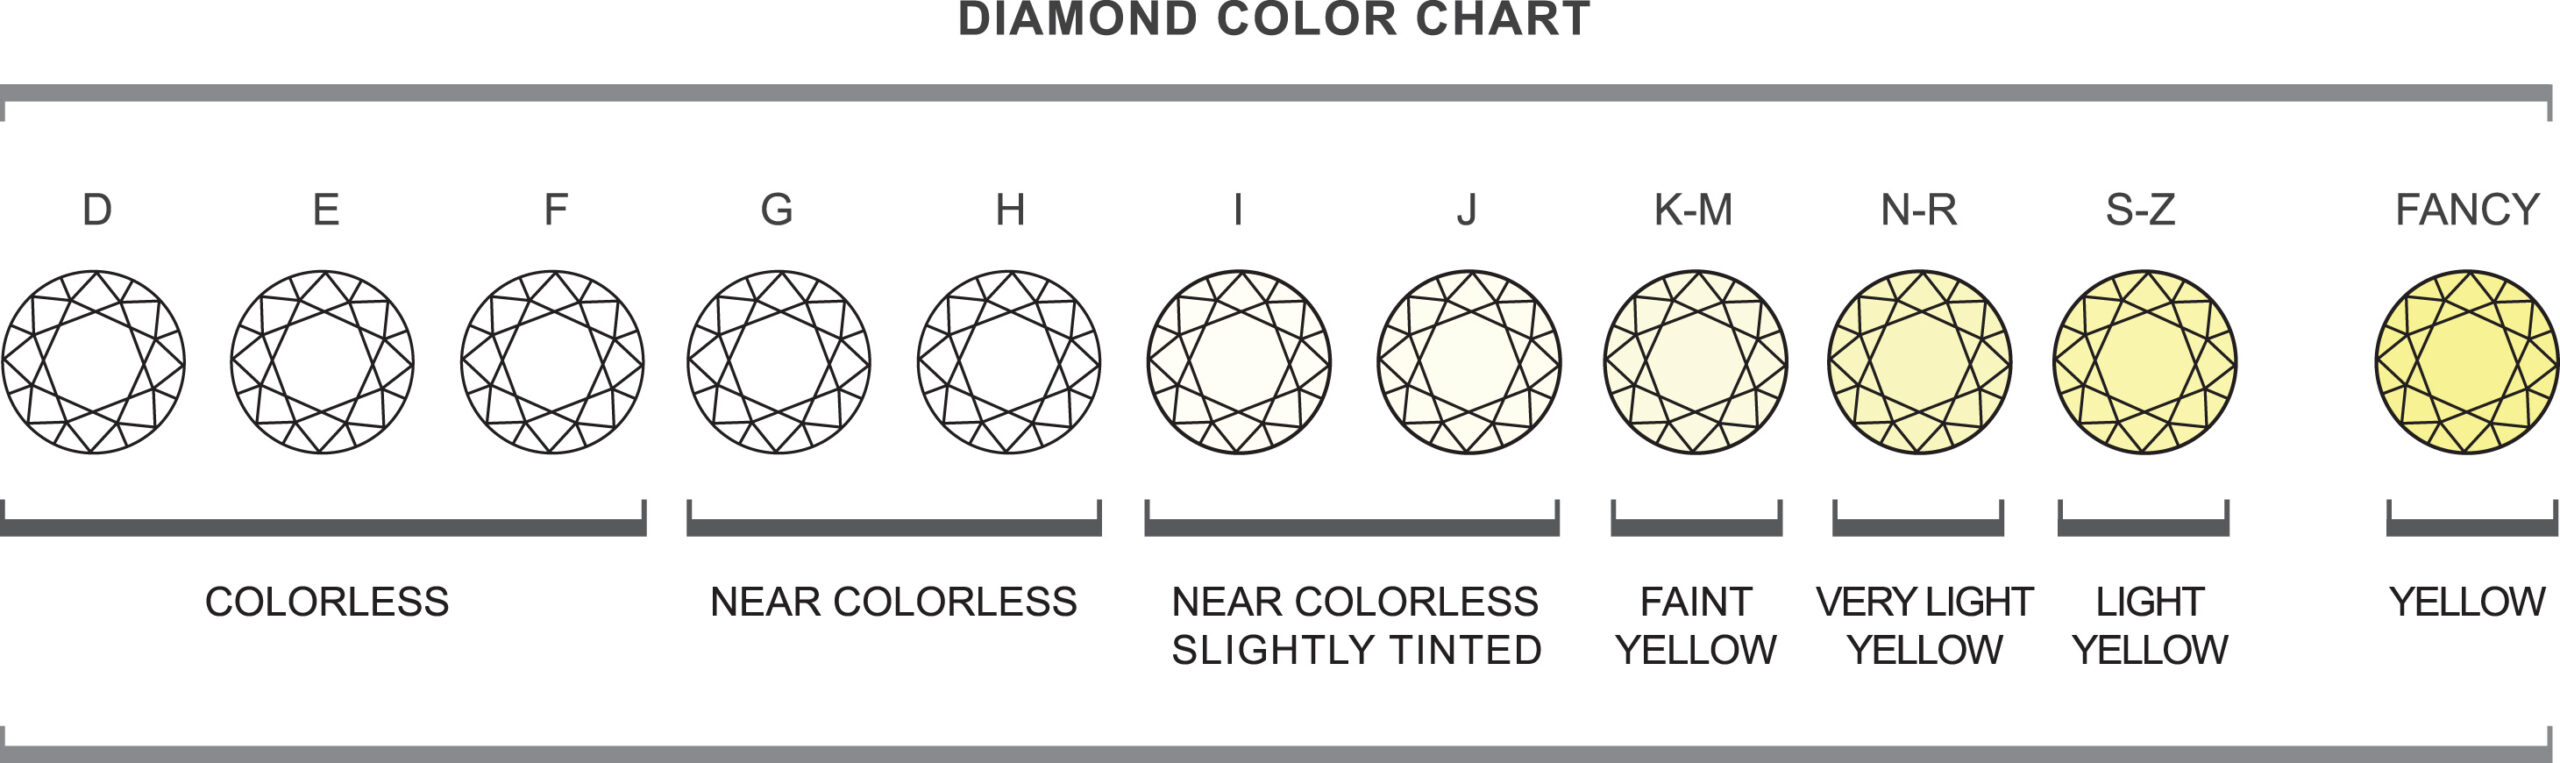 diamonds-color-1870-diamond-color-clarity-chart-2920-x-870